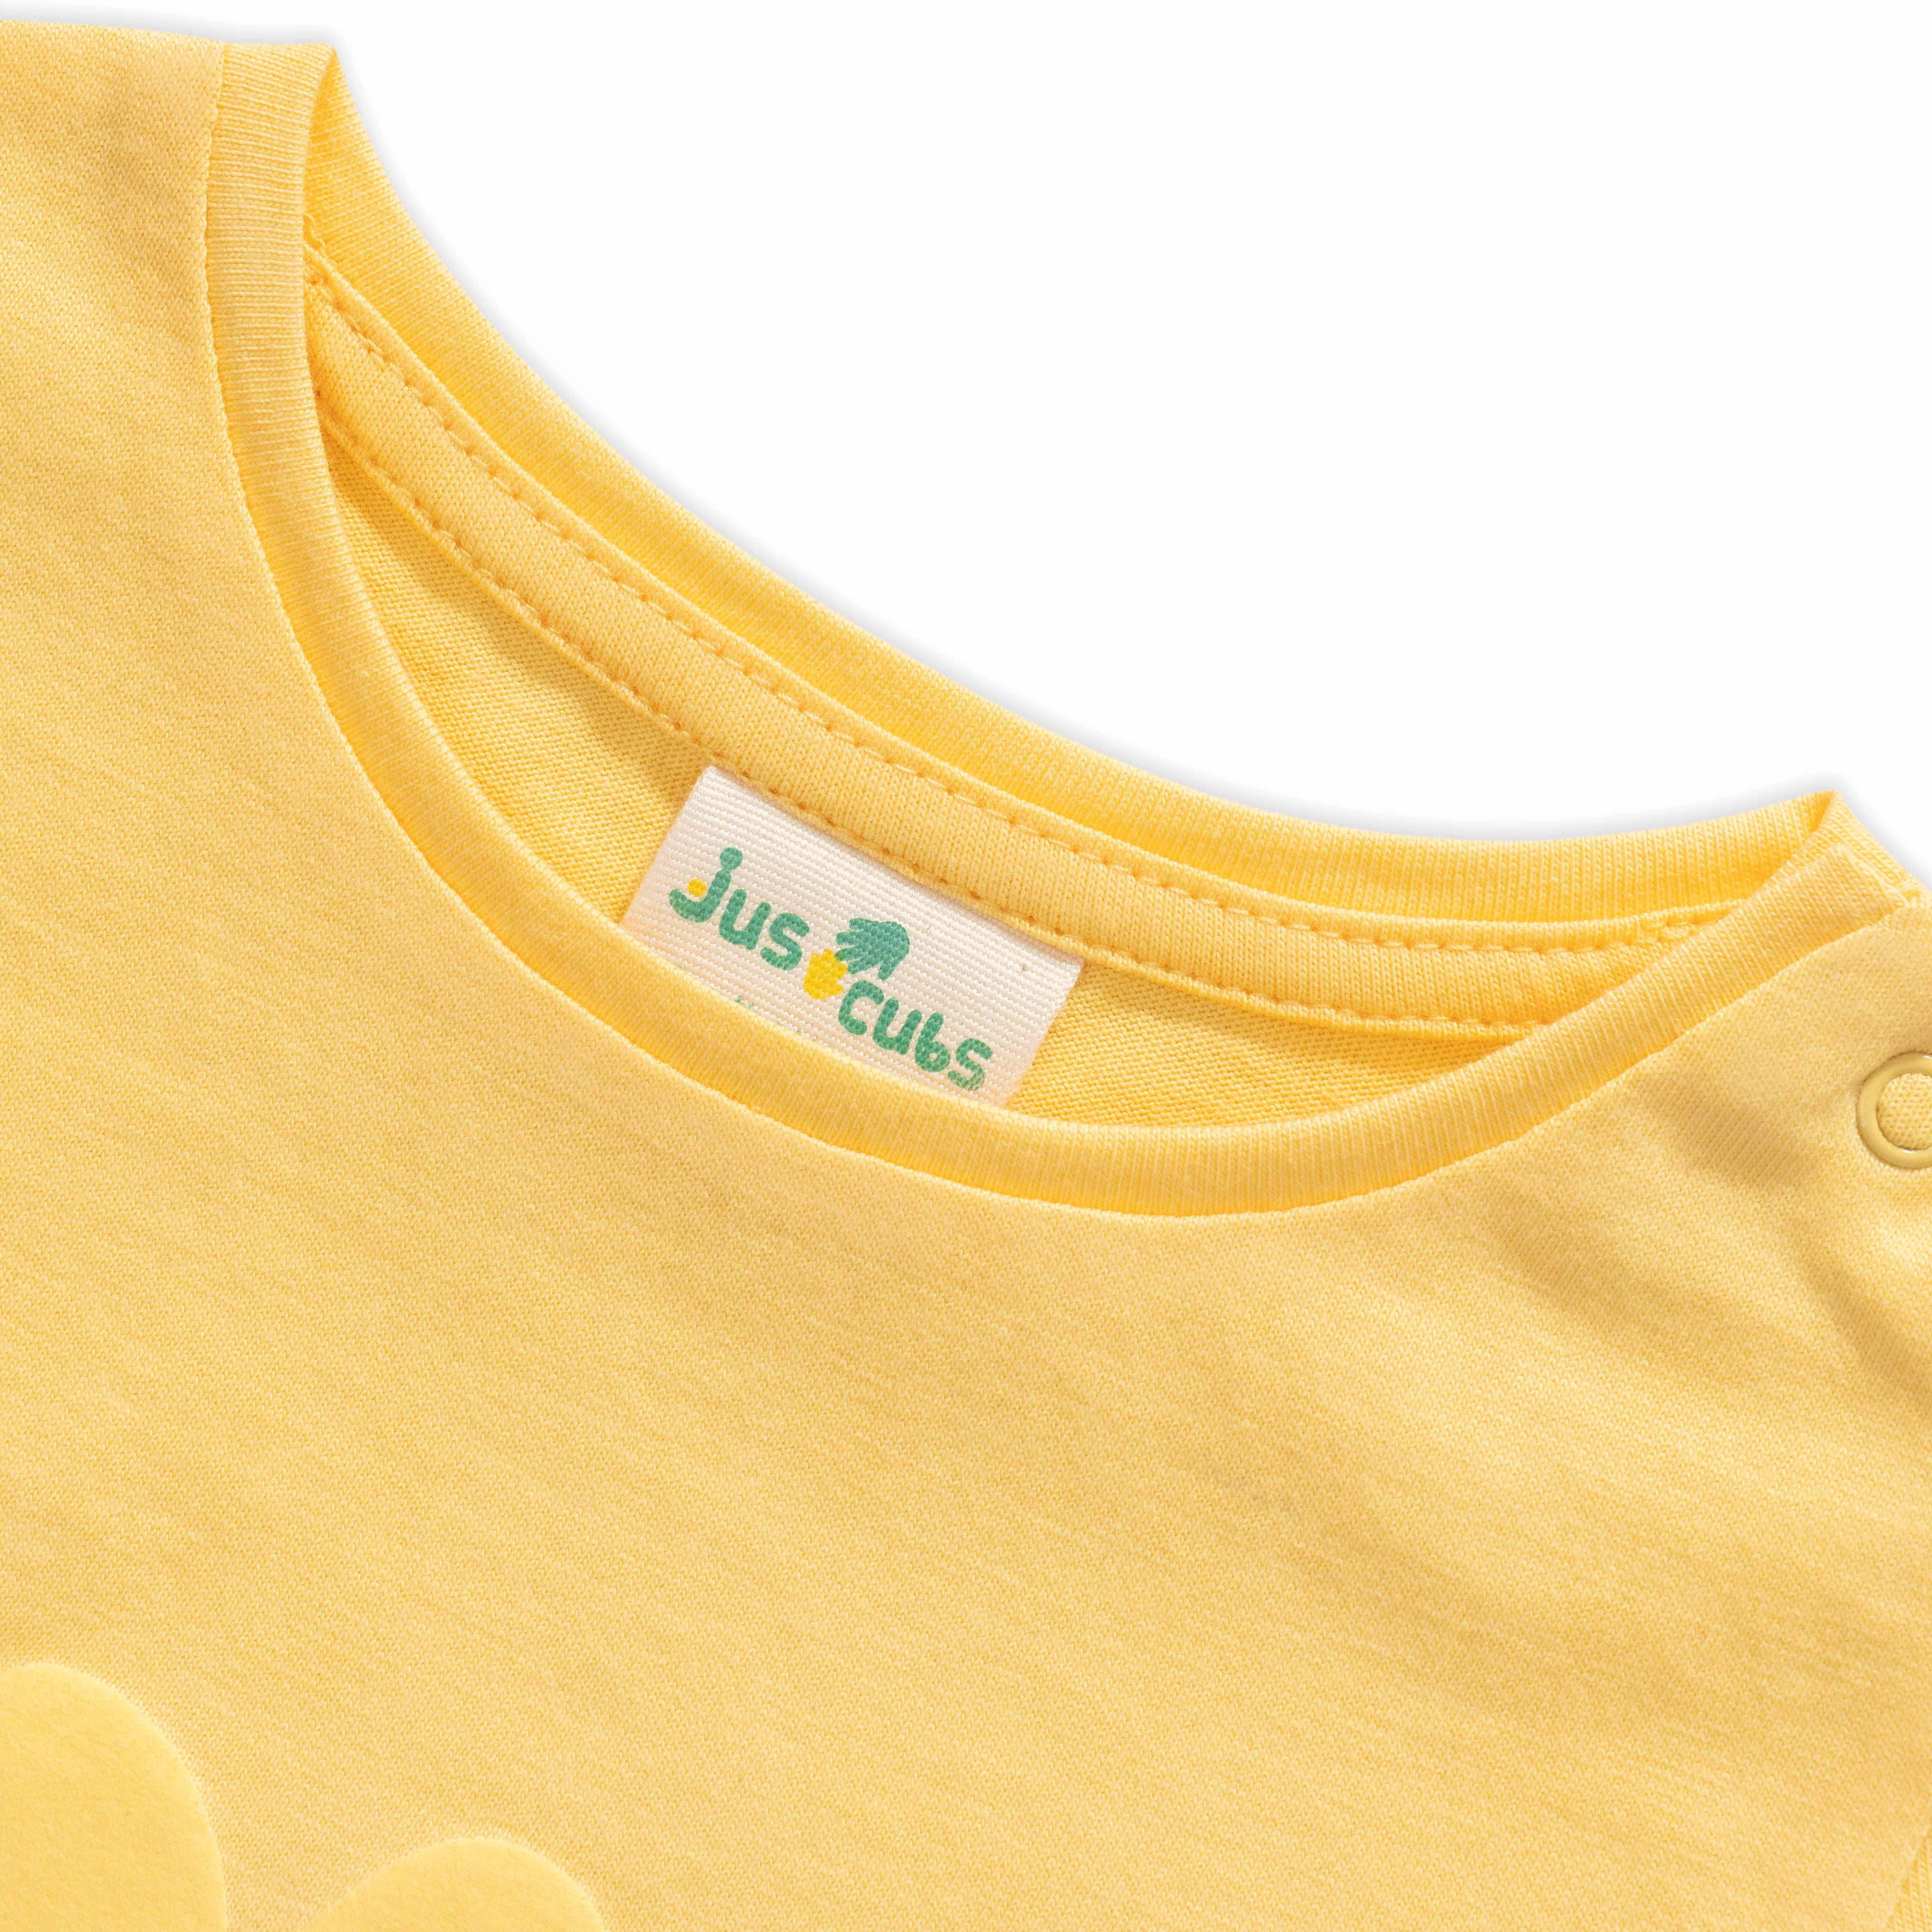 Baby Girls Joy Printed T Shirt & Solid Pant Set